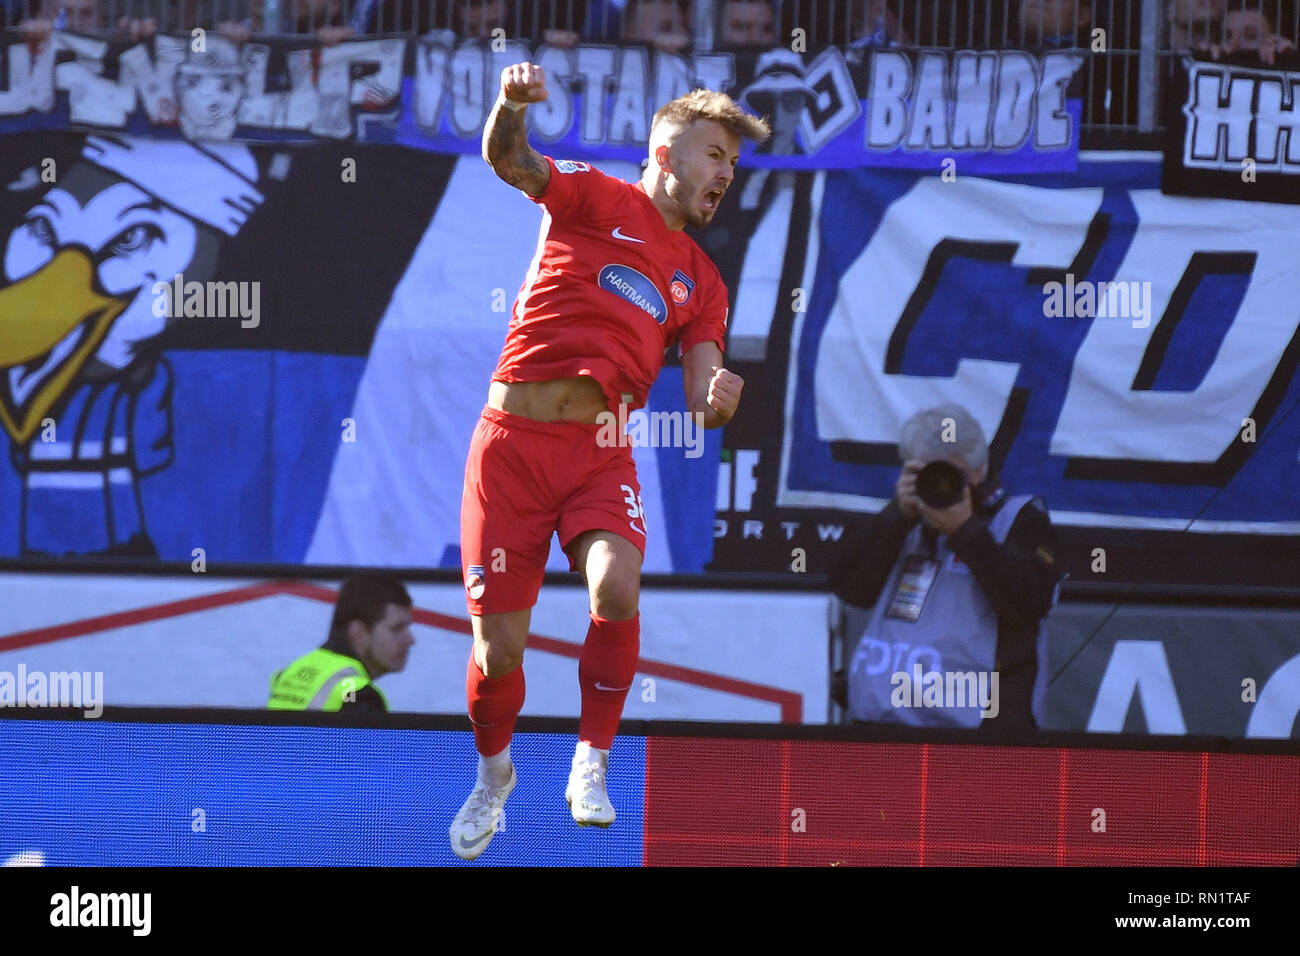 Heidenheim, Deutschland. 16th Feb, 2019. goaljubel Niklas DORSCH (Hdh)  after goal to 1-0, jubilation, joy, enthusiasm, action, single action,  single image, cut out, full body shot, whole figure. Soccer 2.  Bundesliga/FC Heidenheim-HSV